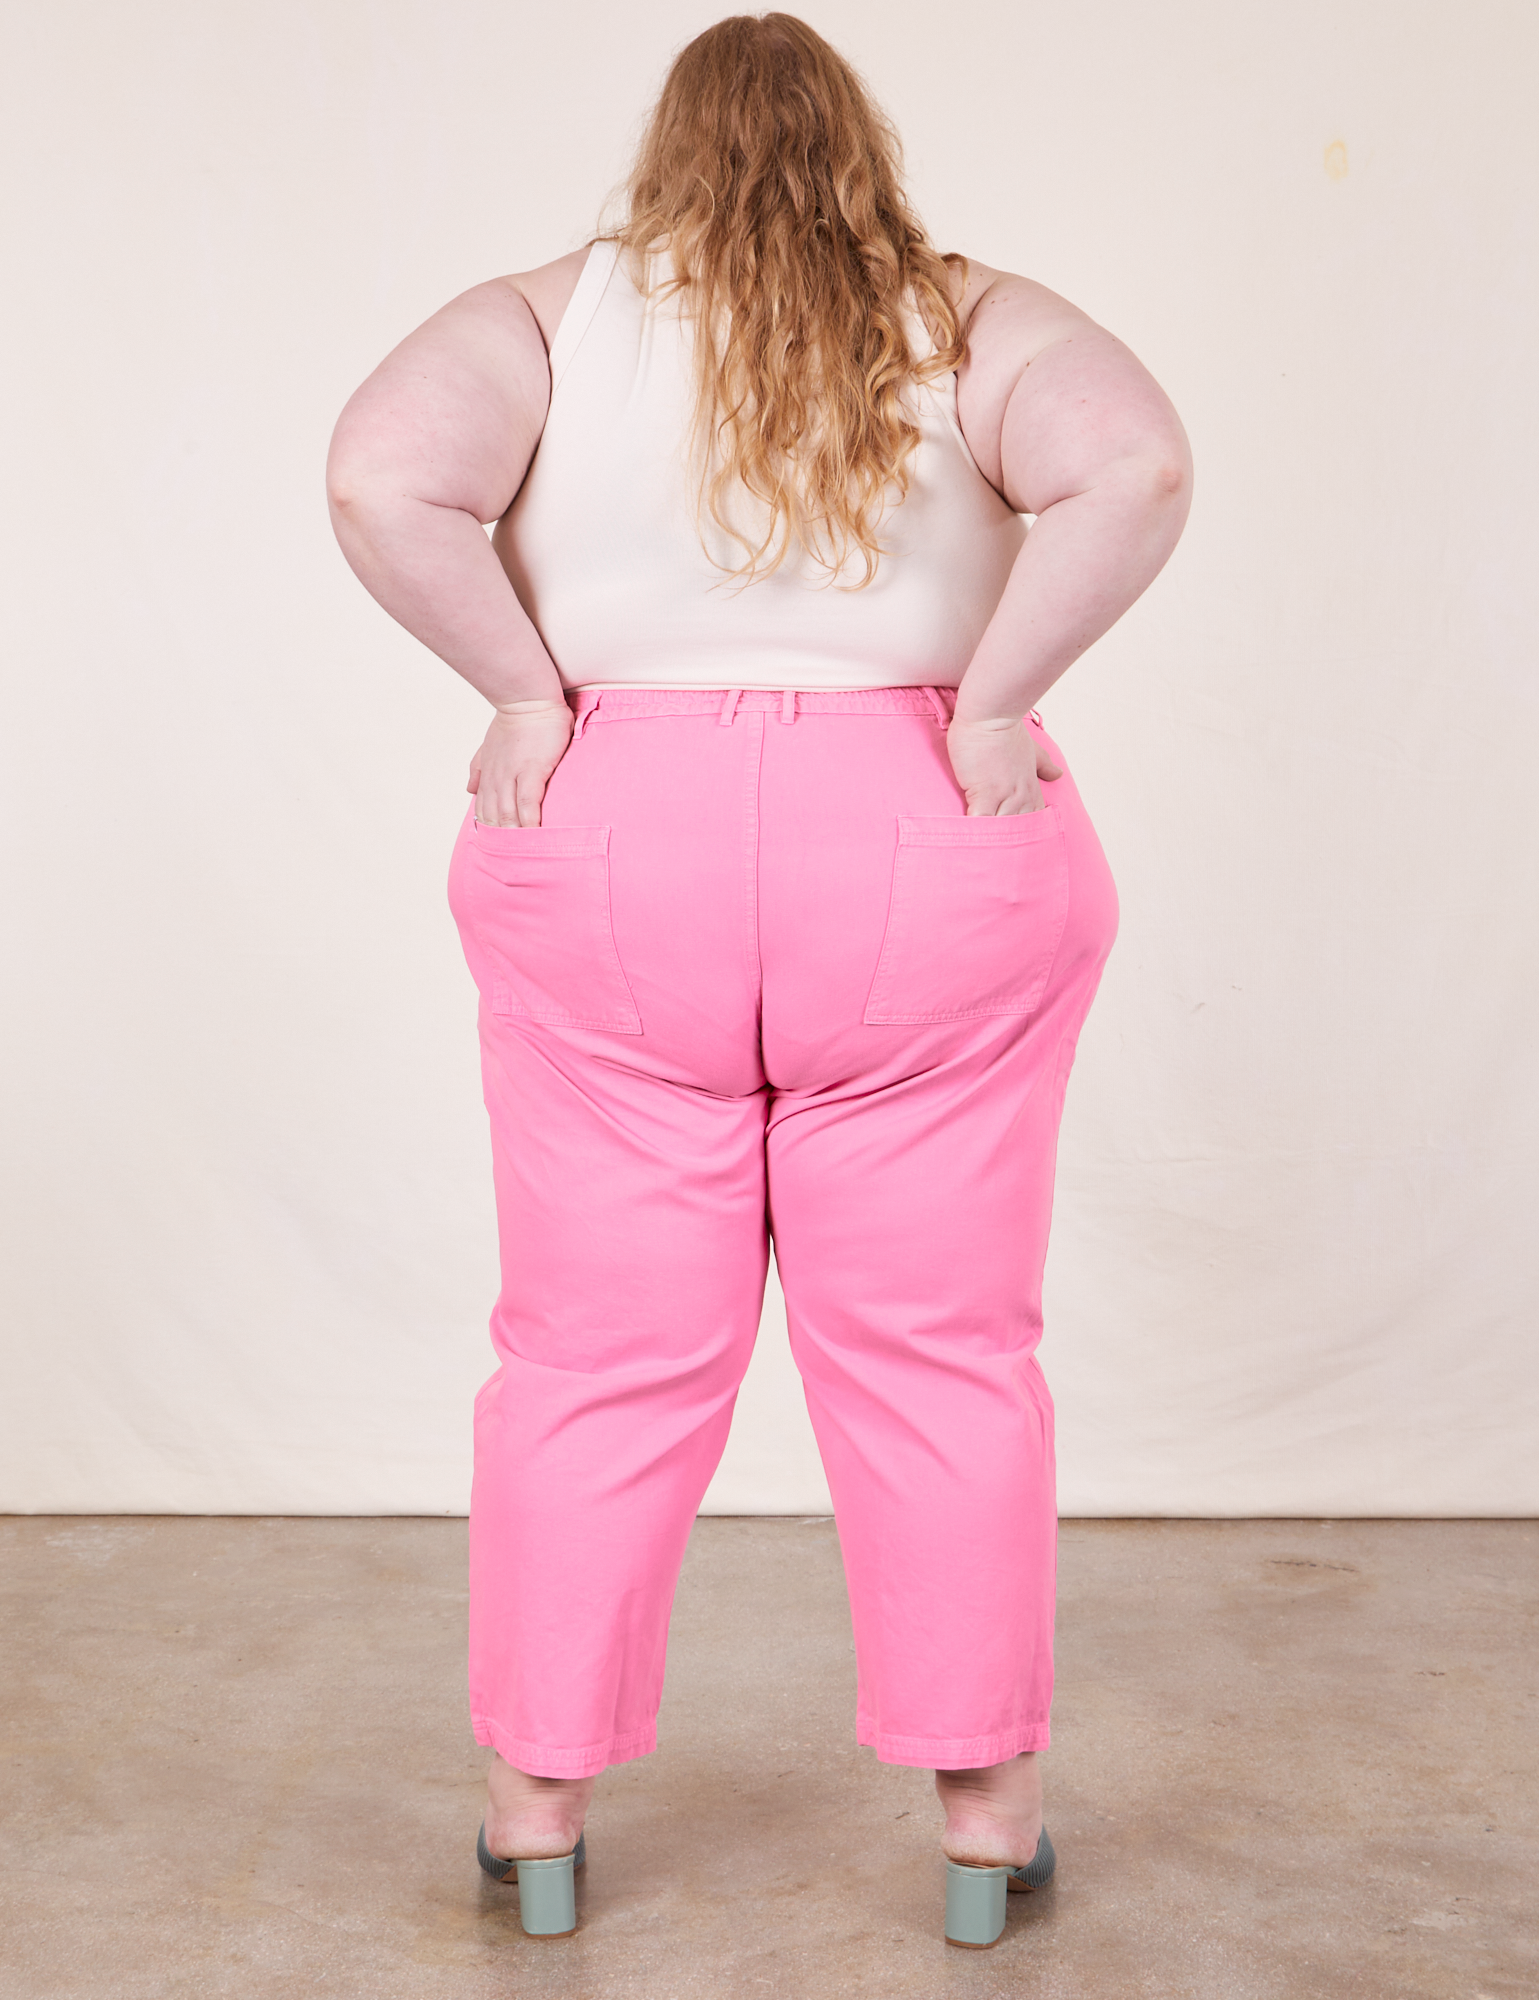 Work Pants in Bubblegum Pink back view on Catie wearing Tank Top in vintage tee off-white